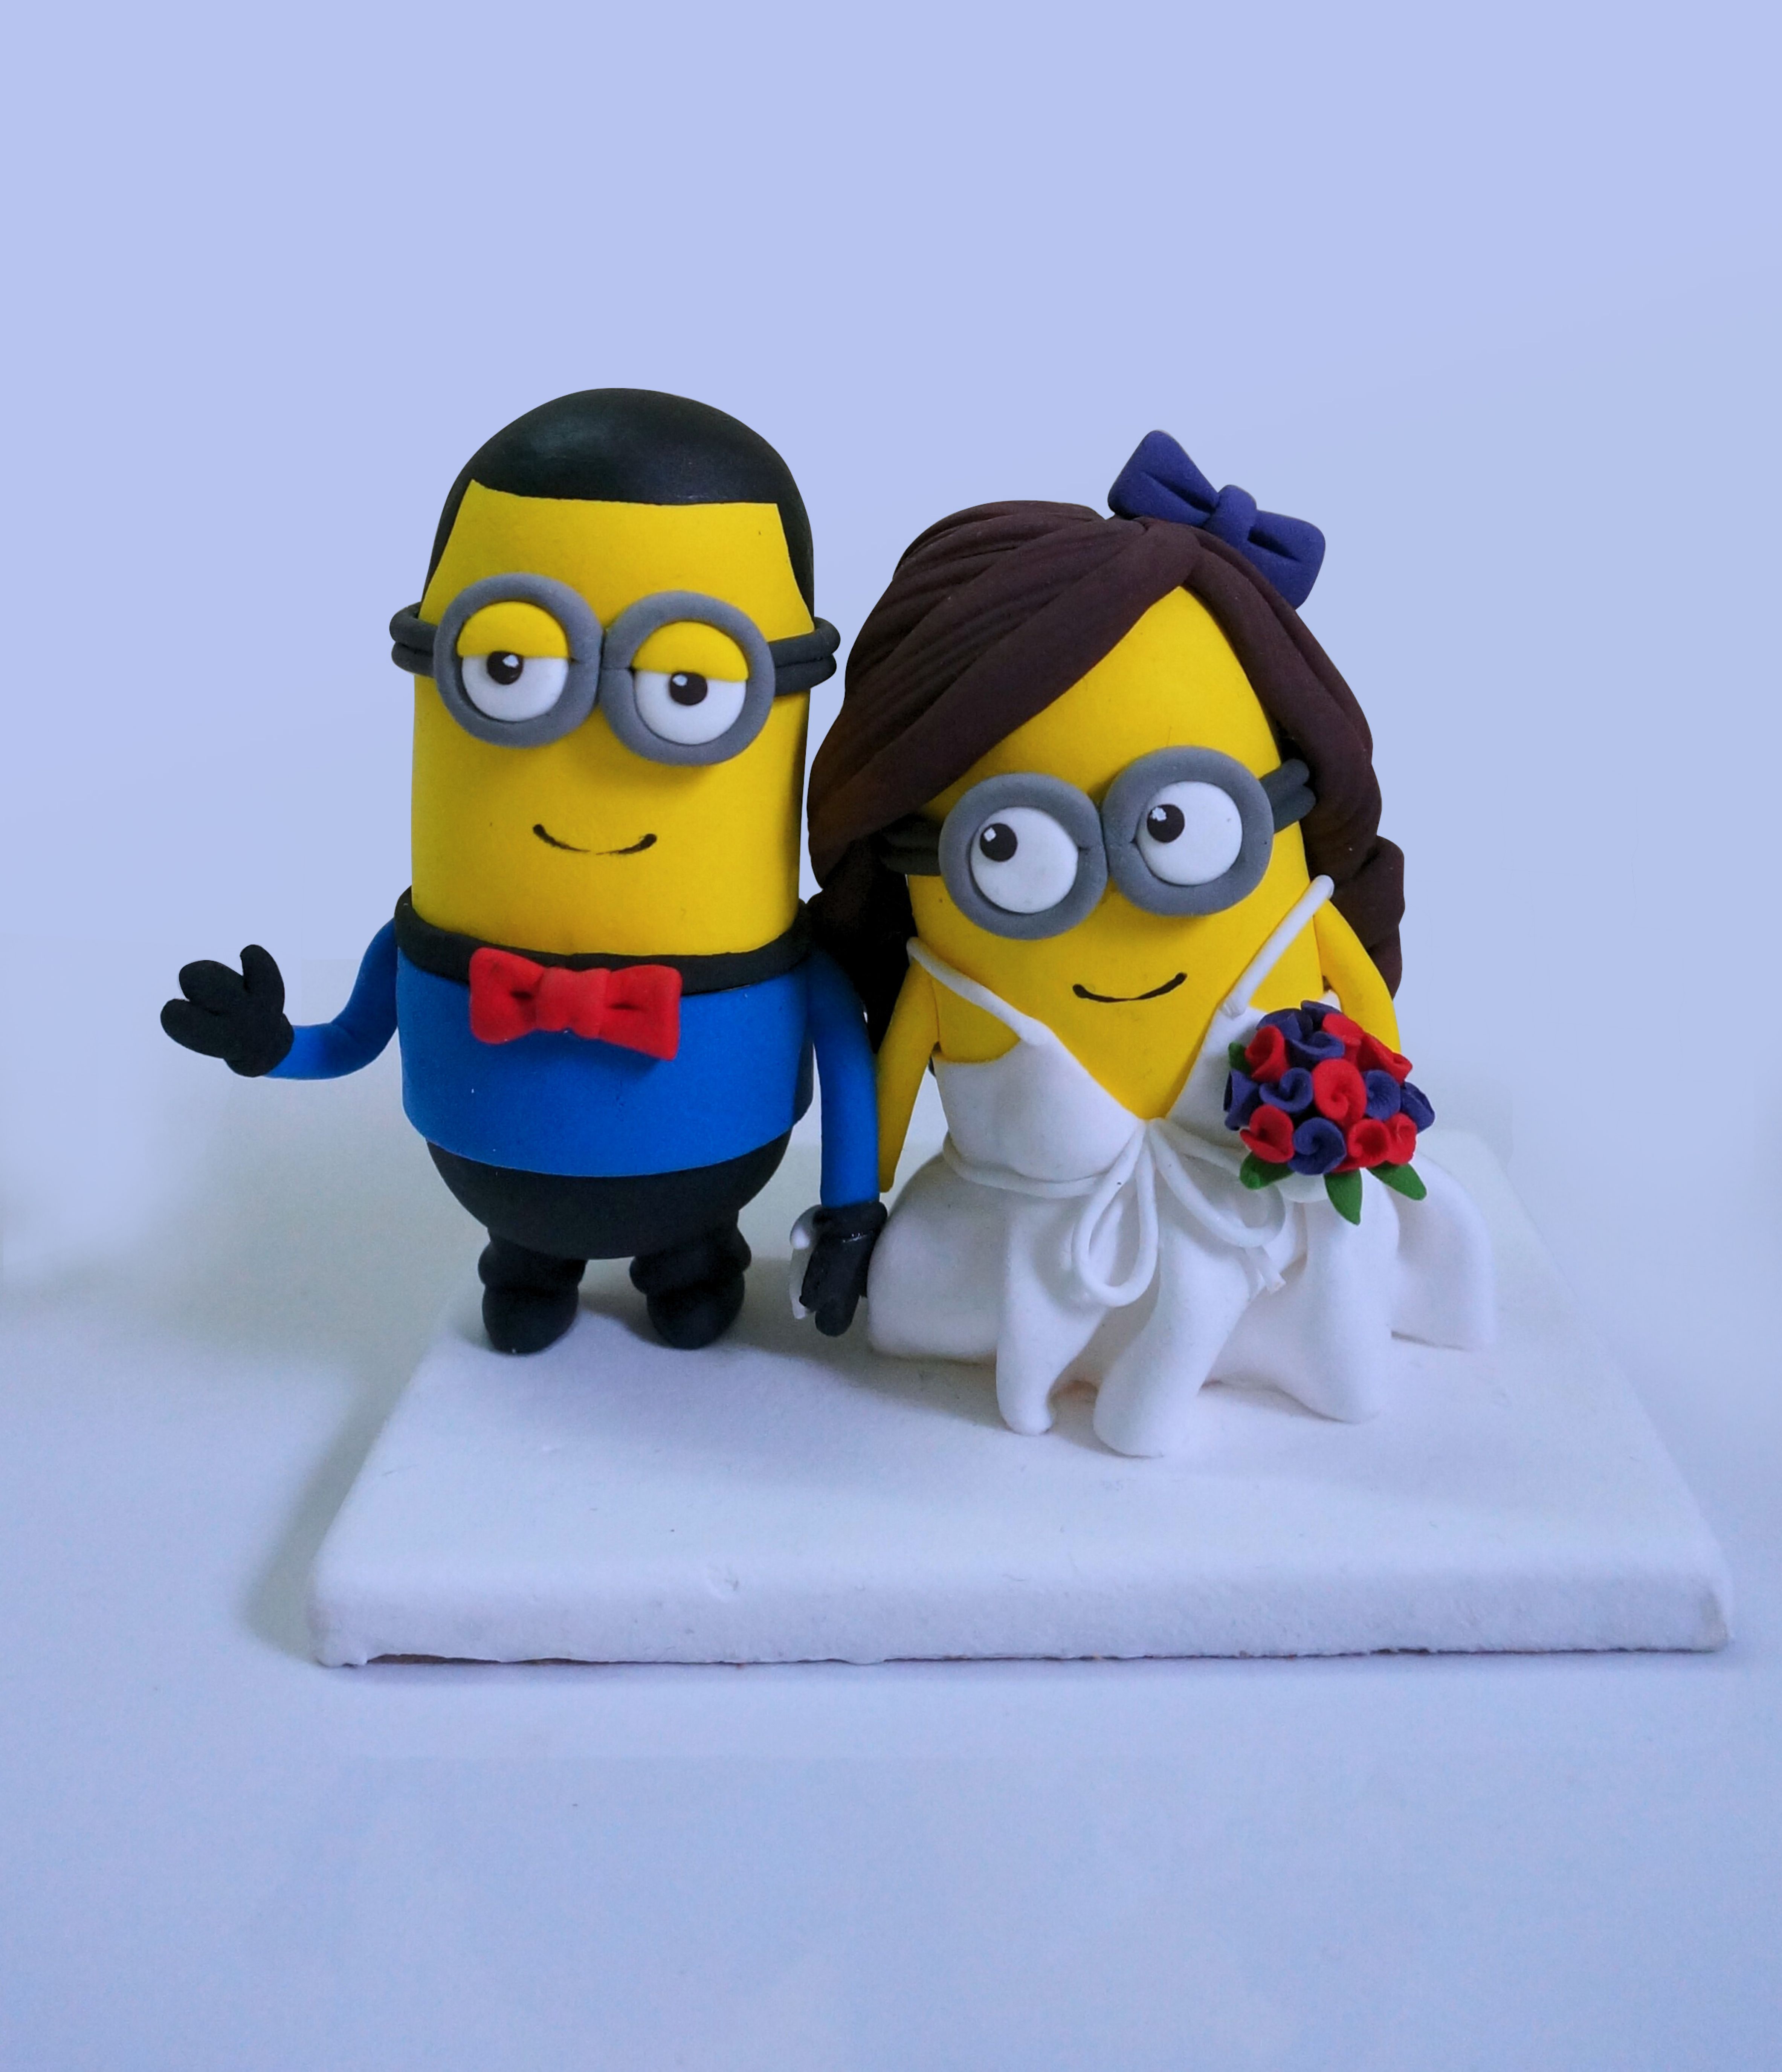 Picture of Star Trek Wedding Cake Topper, Minion Wedding Cake Topper